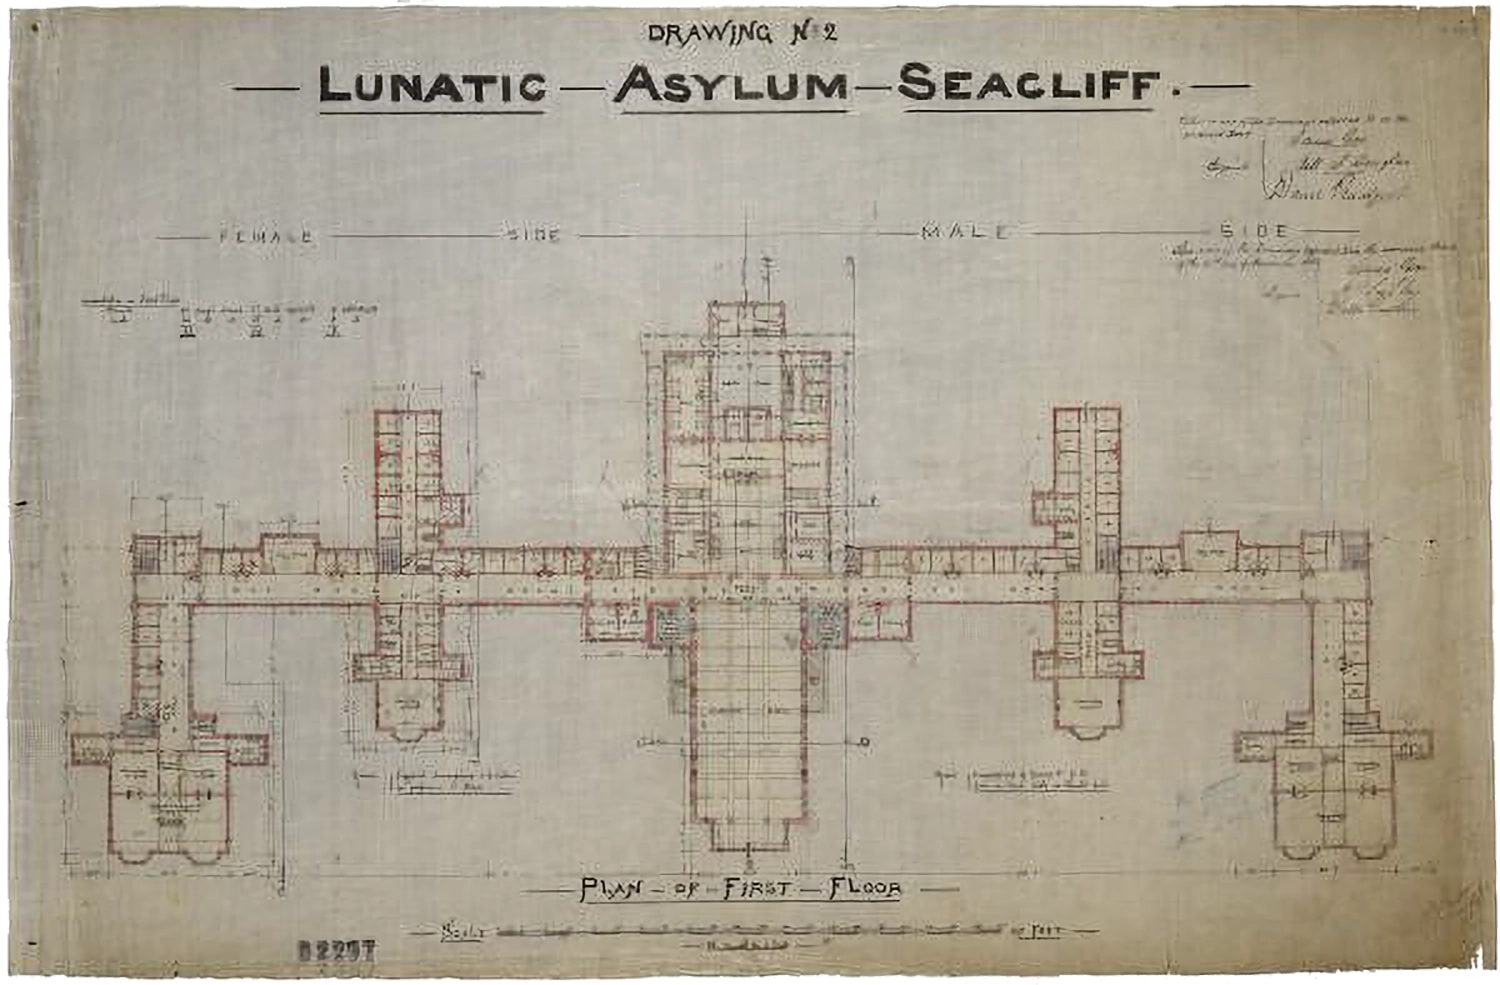 Hand drawn floor plan of the Seacliff Lunatic Asylum.